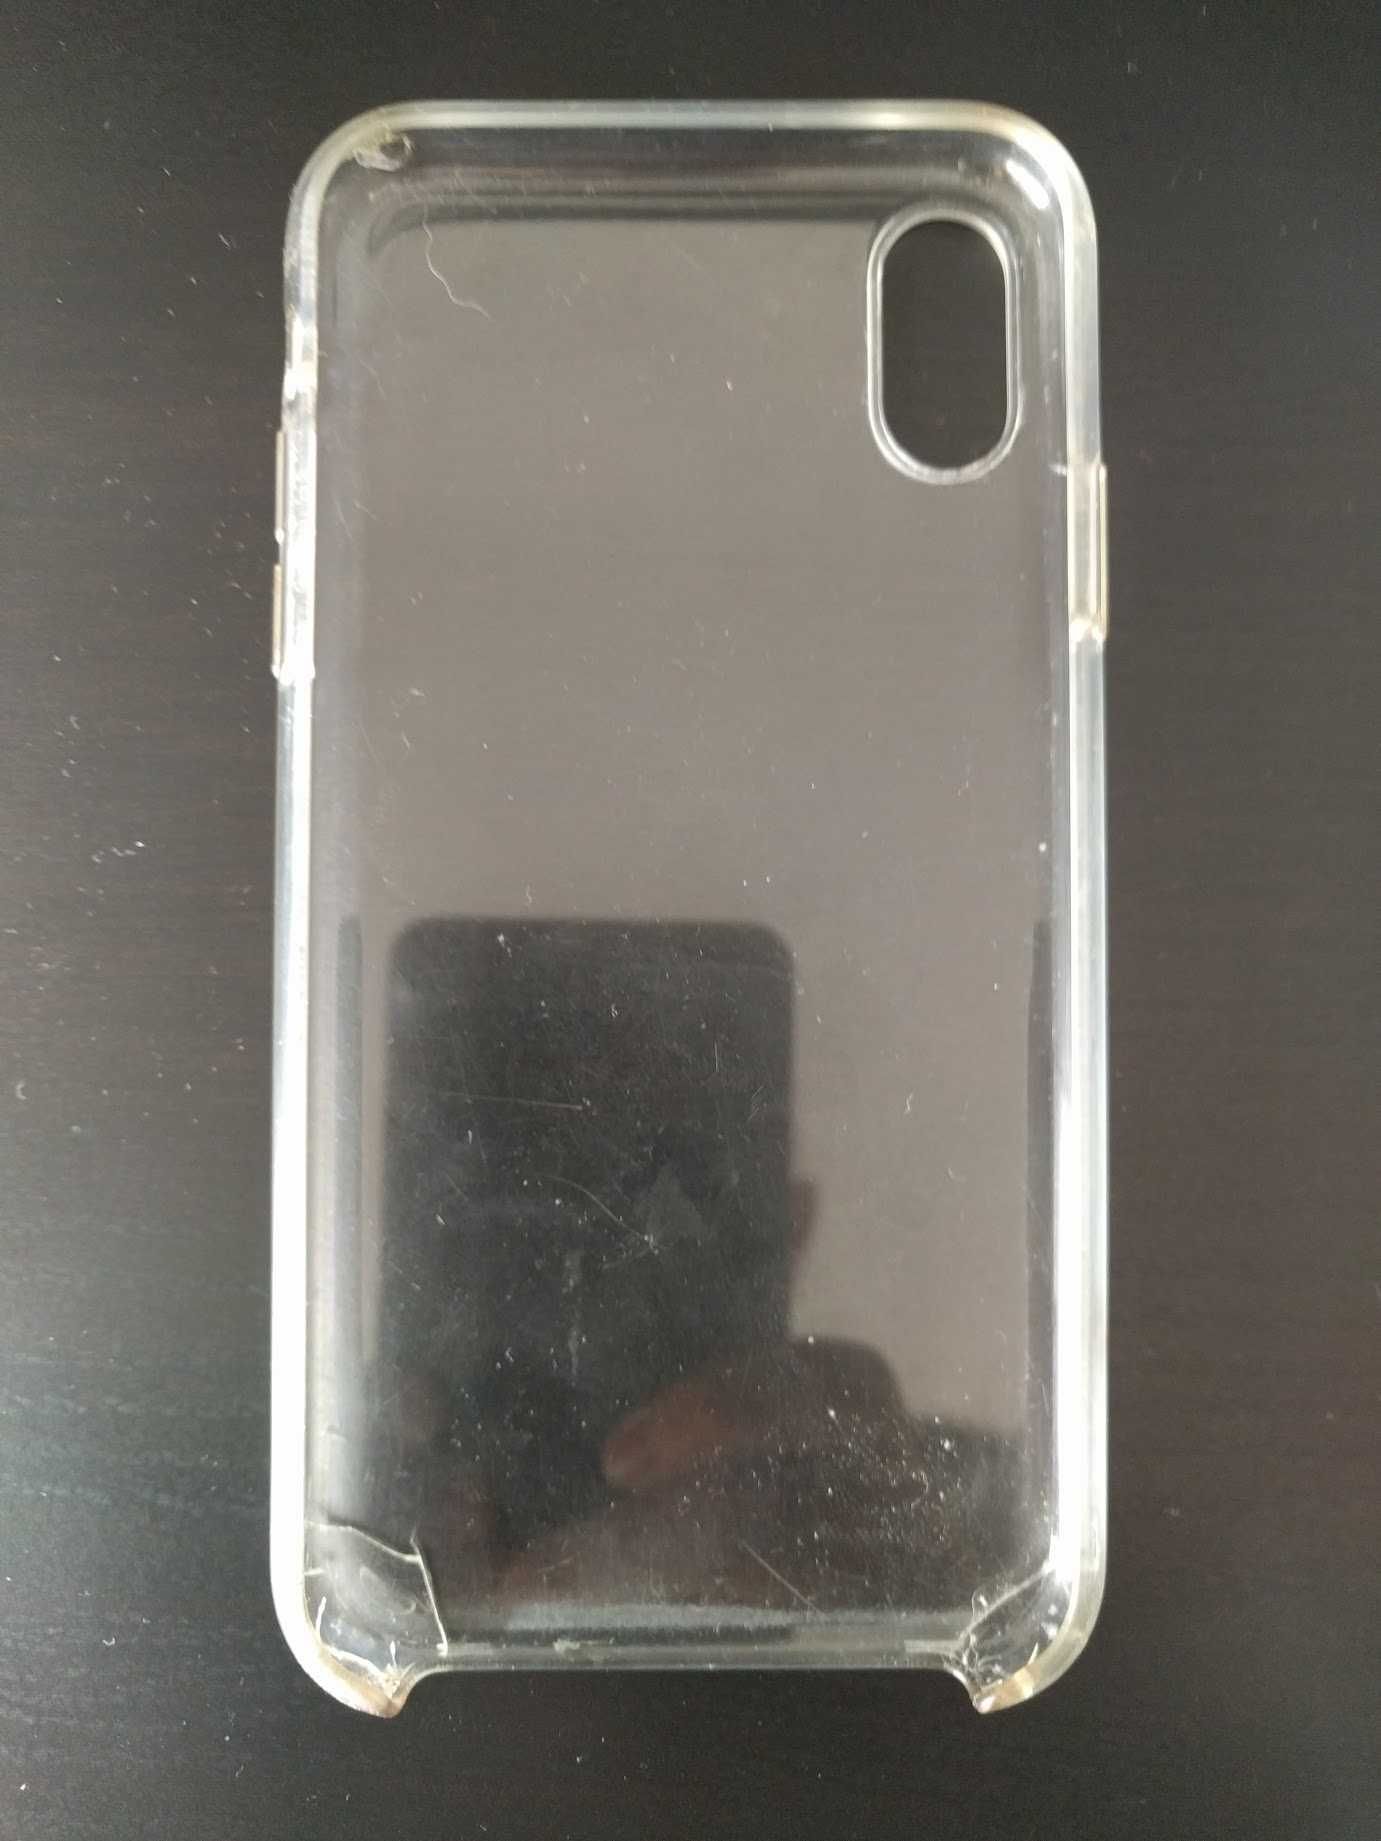 Capa transparente iPhone XR (marca Apple)